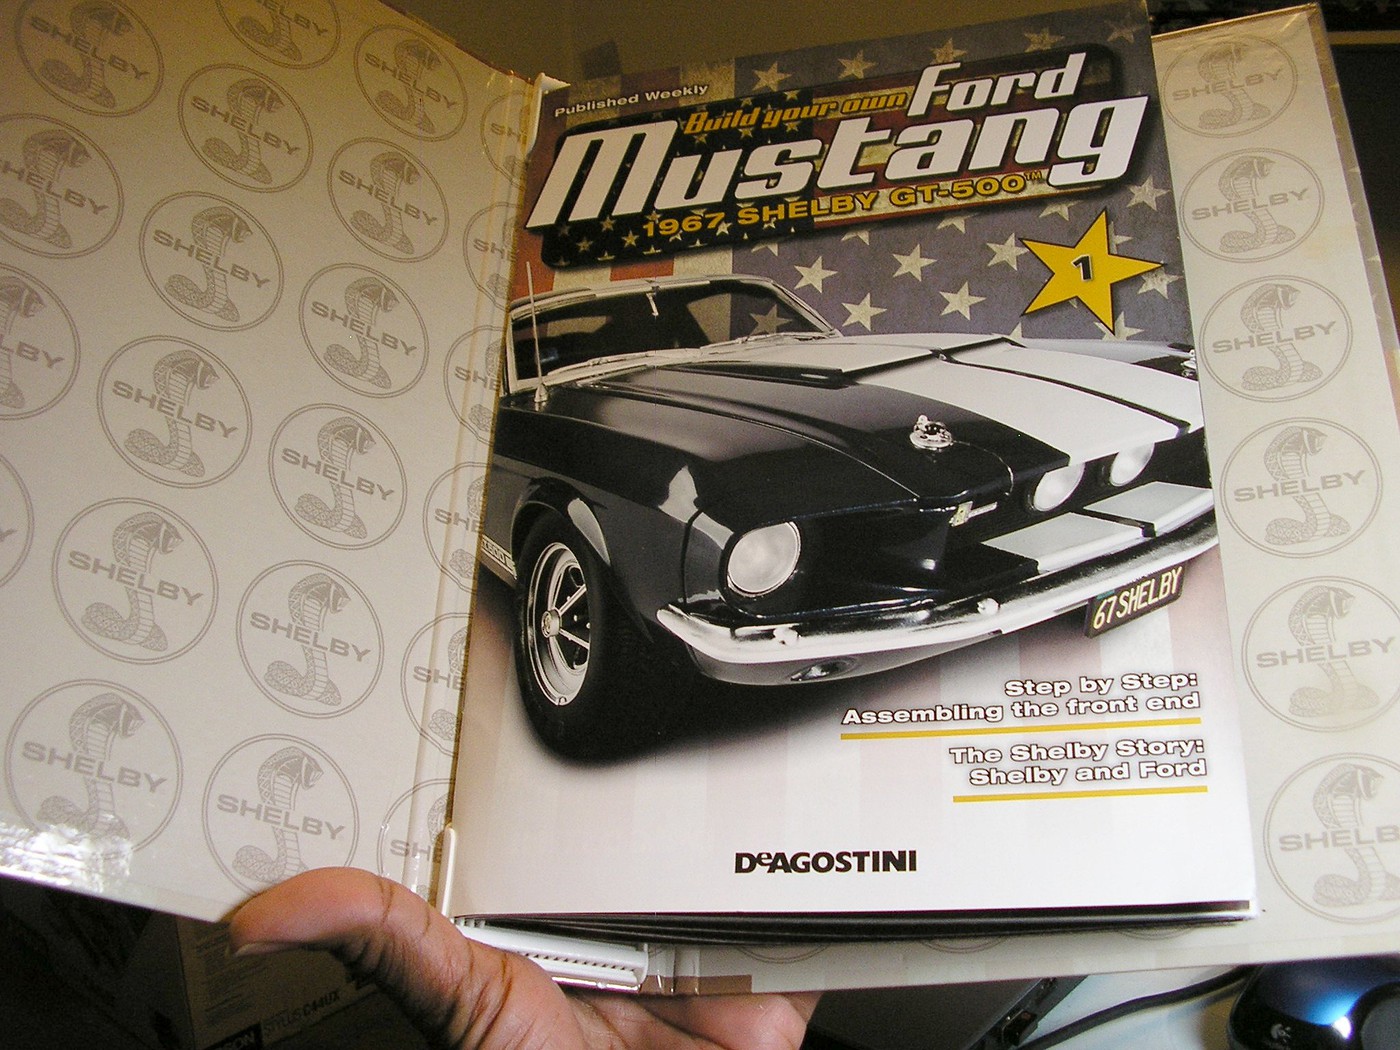 1/8 DEAGOSTINI Build Your Eigene Ford MUSTANG 1967 Shelby GT-500 Ausgabe 51 Inc 